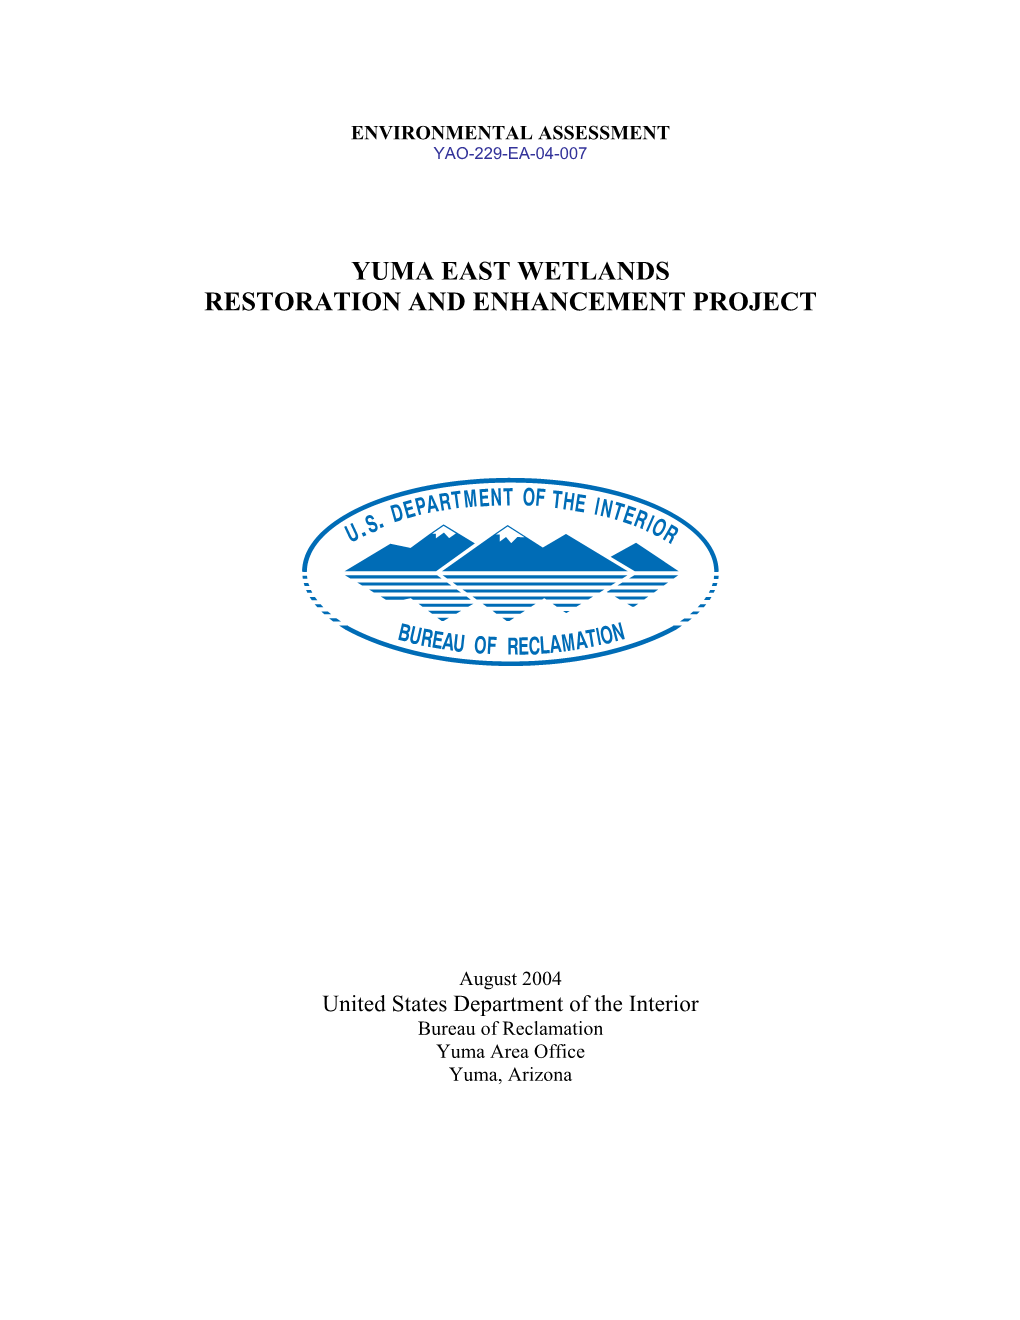 Yuma East Wetlands Restoration and Enhancement Project